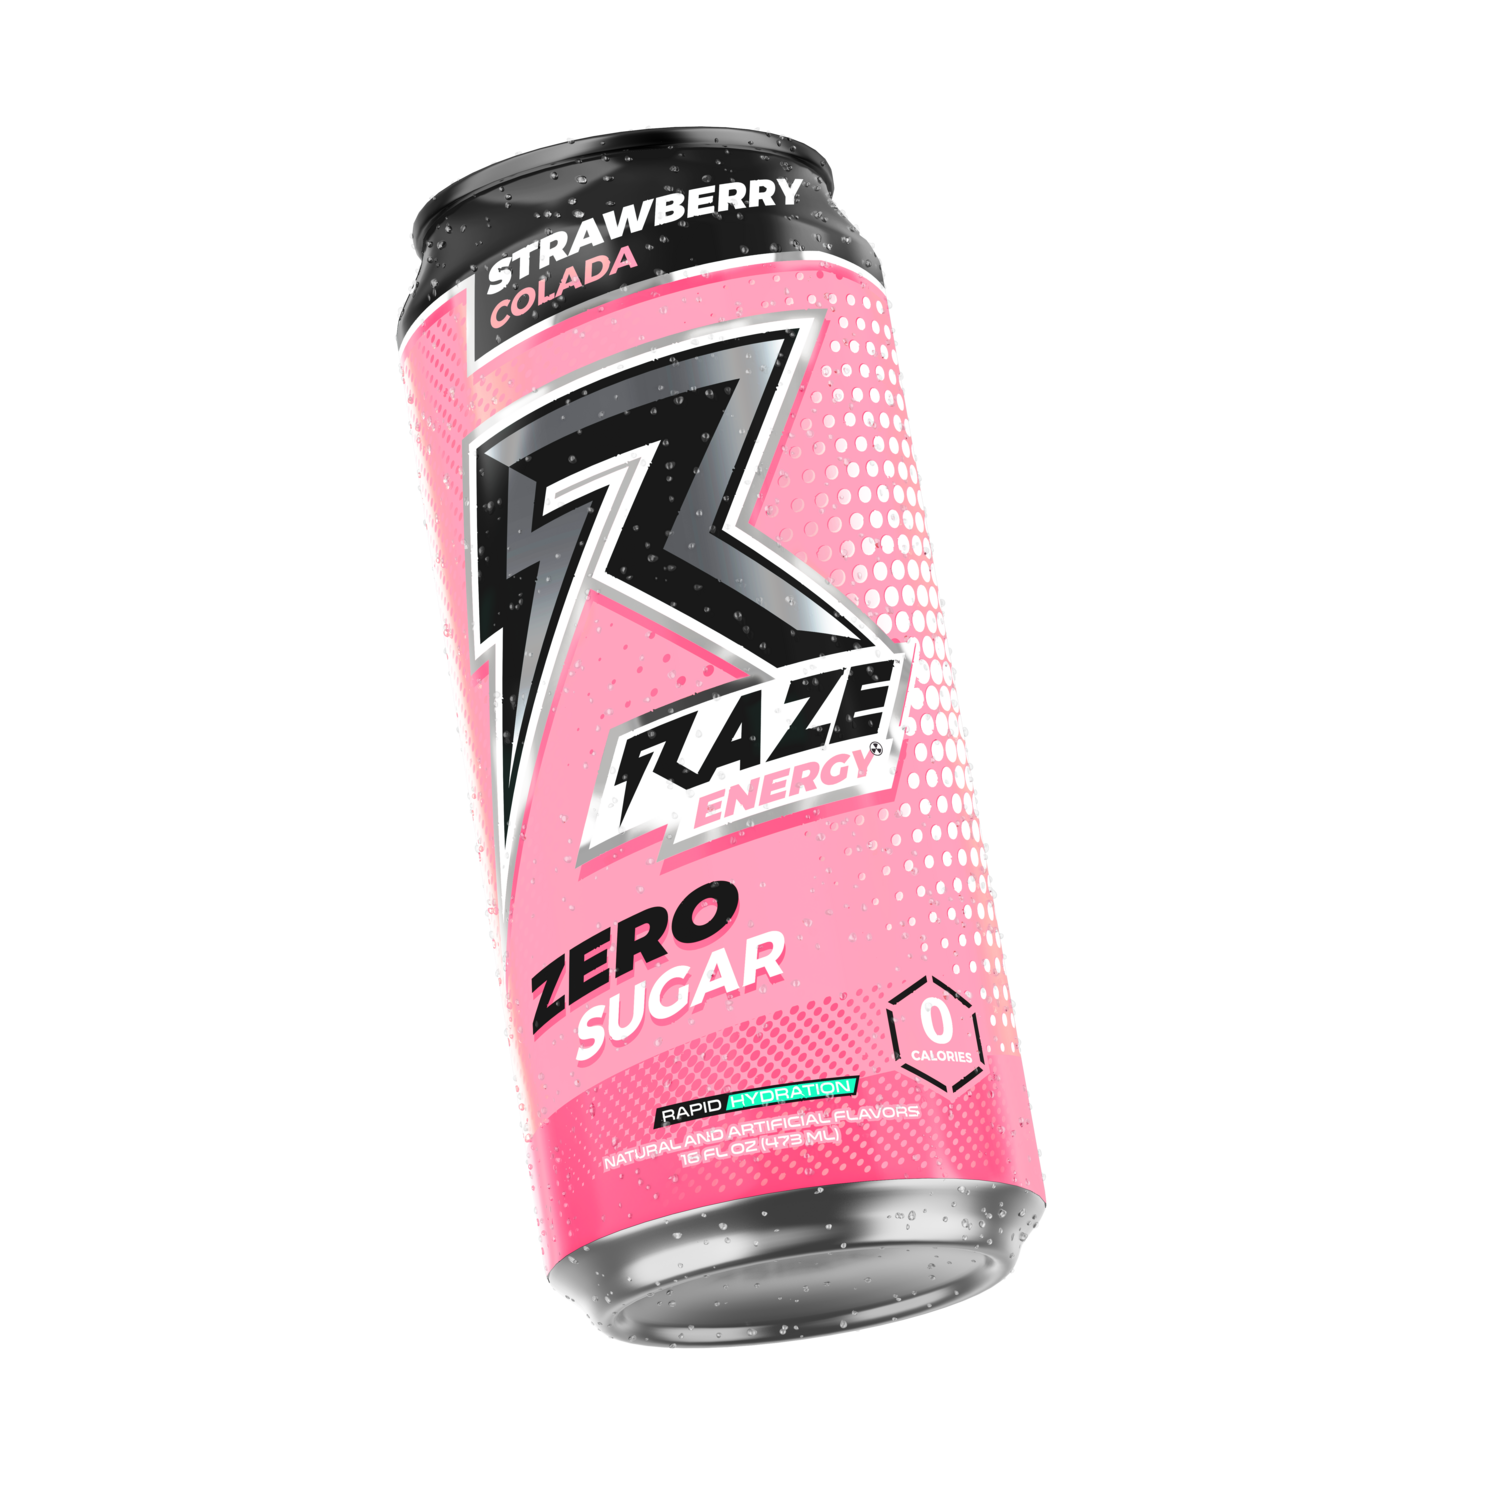 Raze Energy - Strawberry Colada 16oz. (One Can)